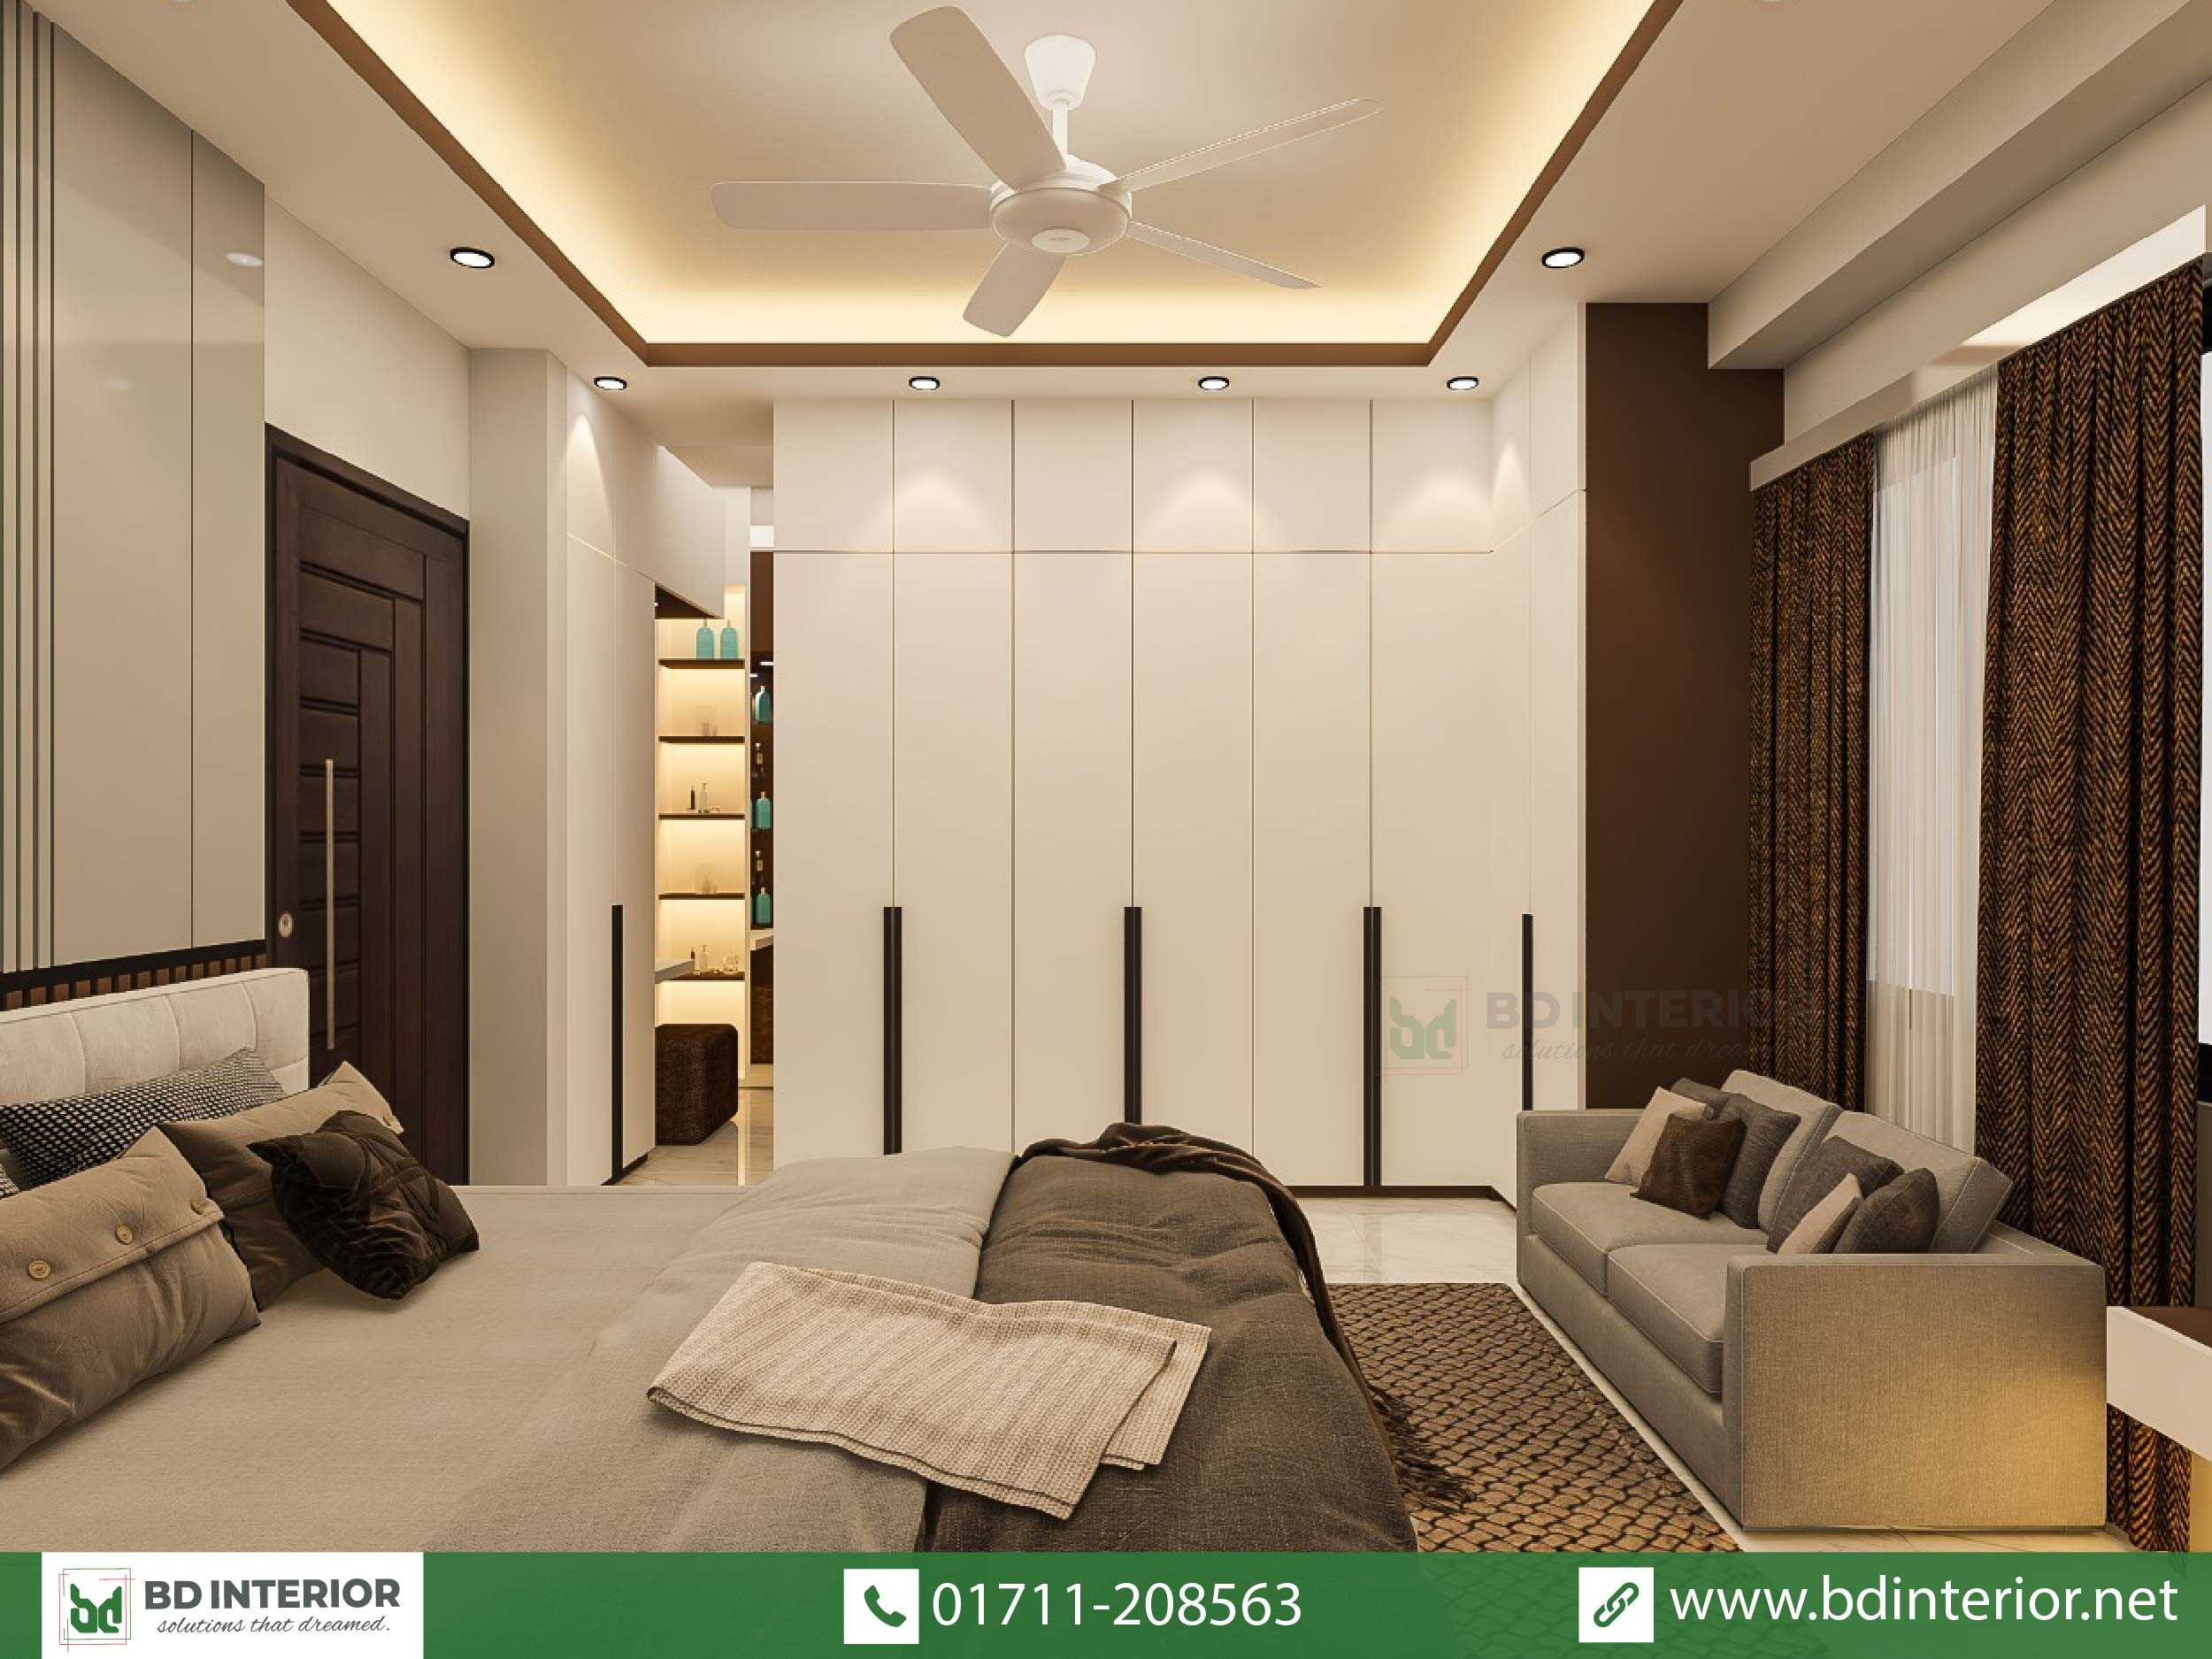 Bedroom Interior Design Bangladesh